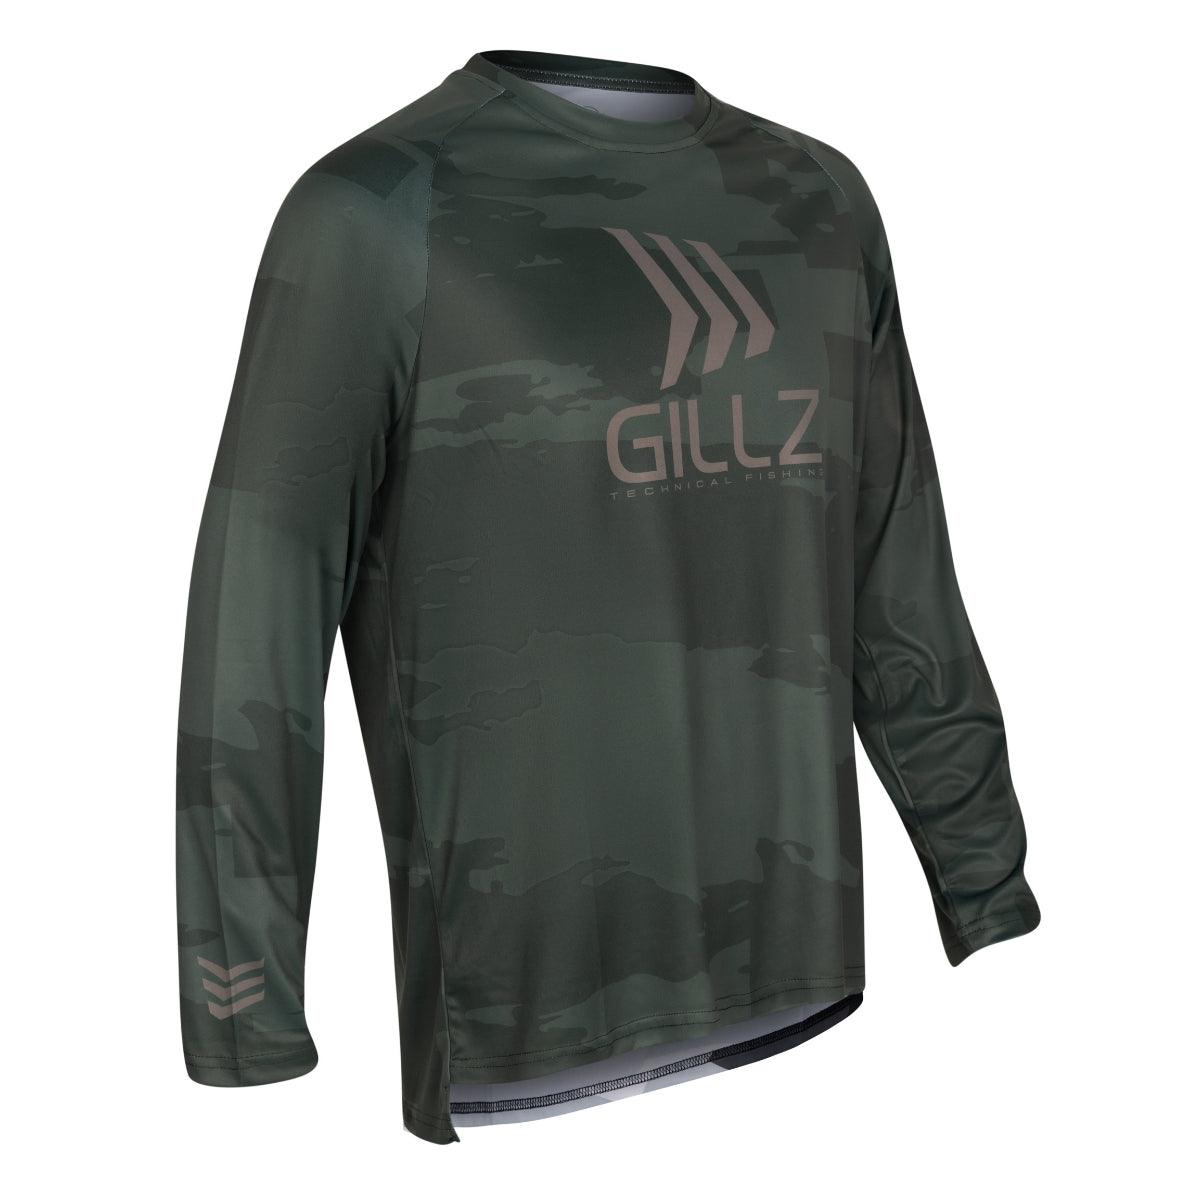 Gillz - Contender Long Sleeve Shirt UV Swell, Rifle Green (All Sizes) - Technical Outdoor Gear